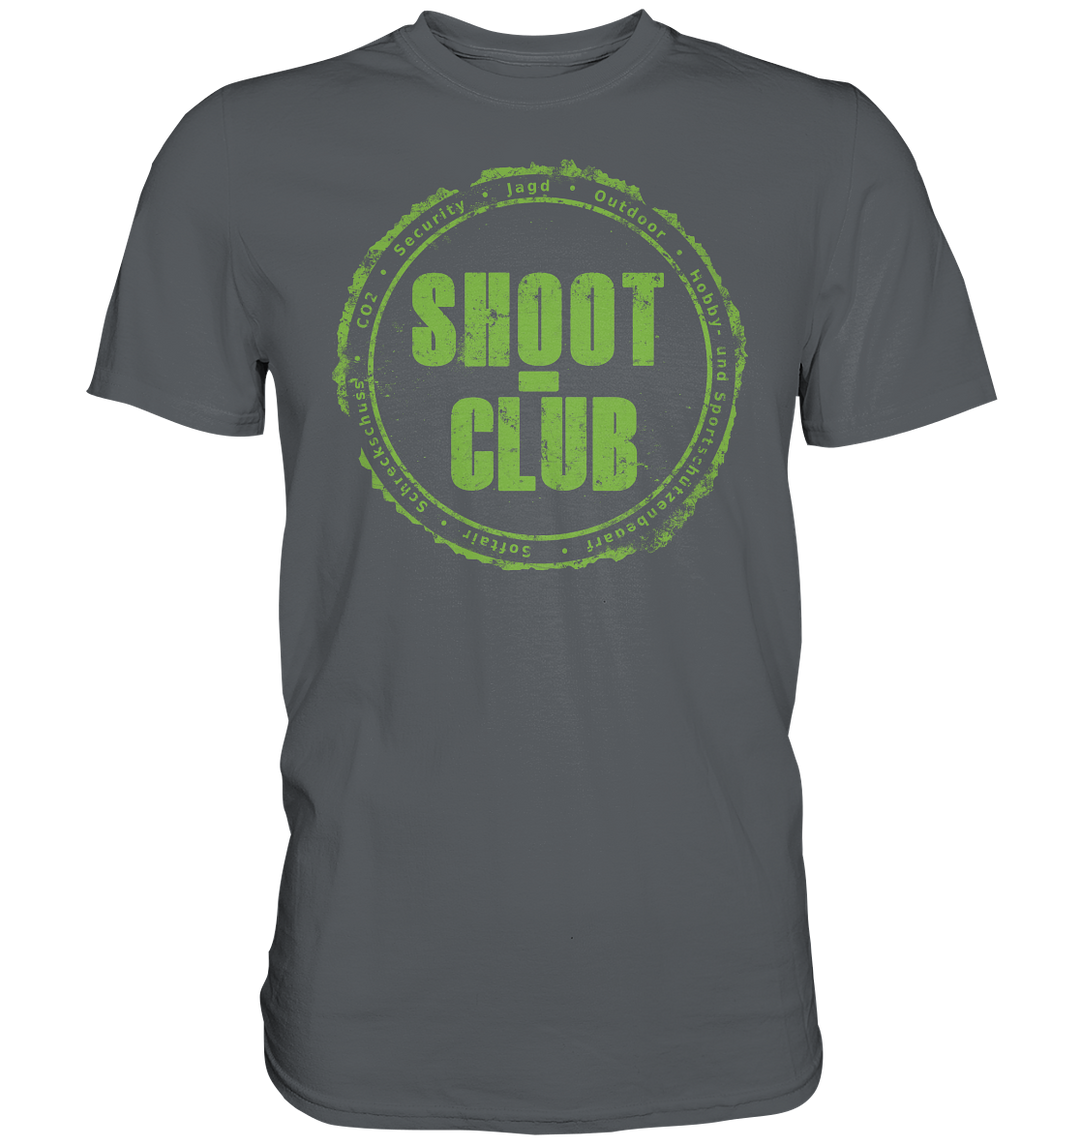 "Shoot Club Stamp" - Premium Shirt